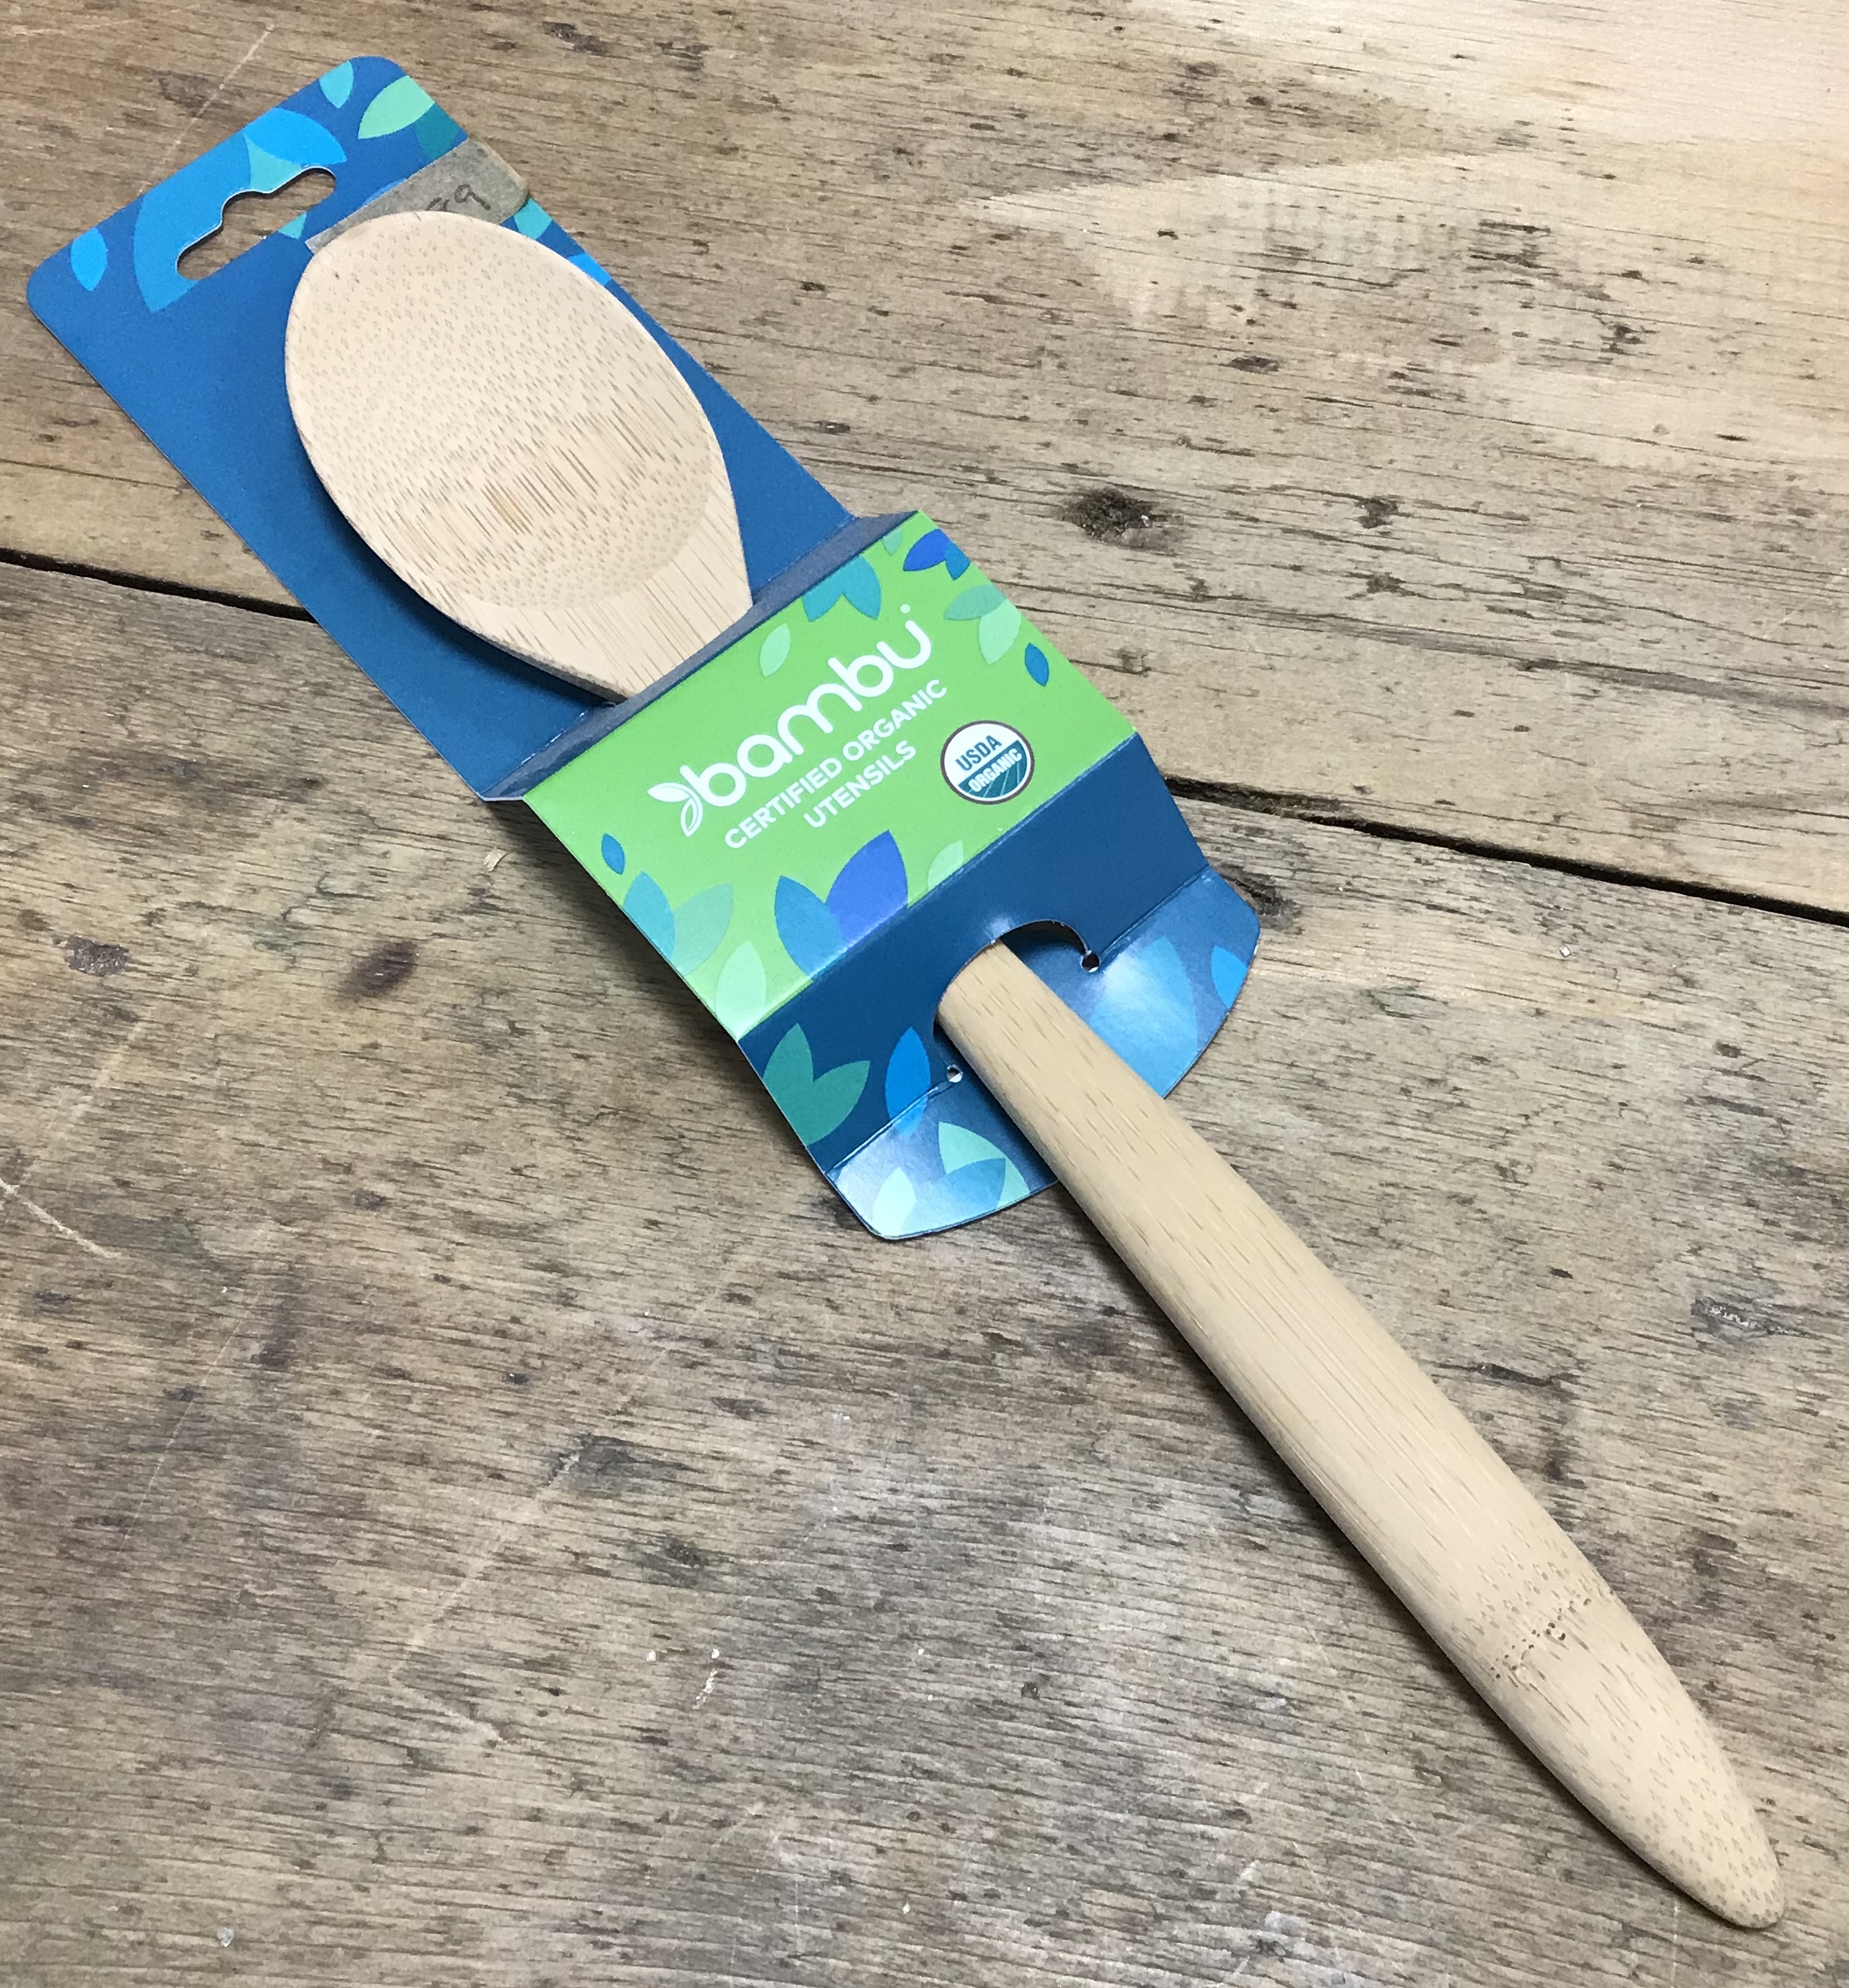 Long Bamboo Spoon